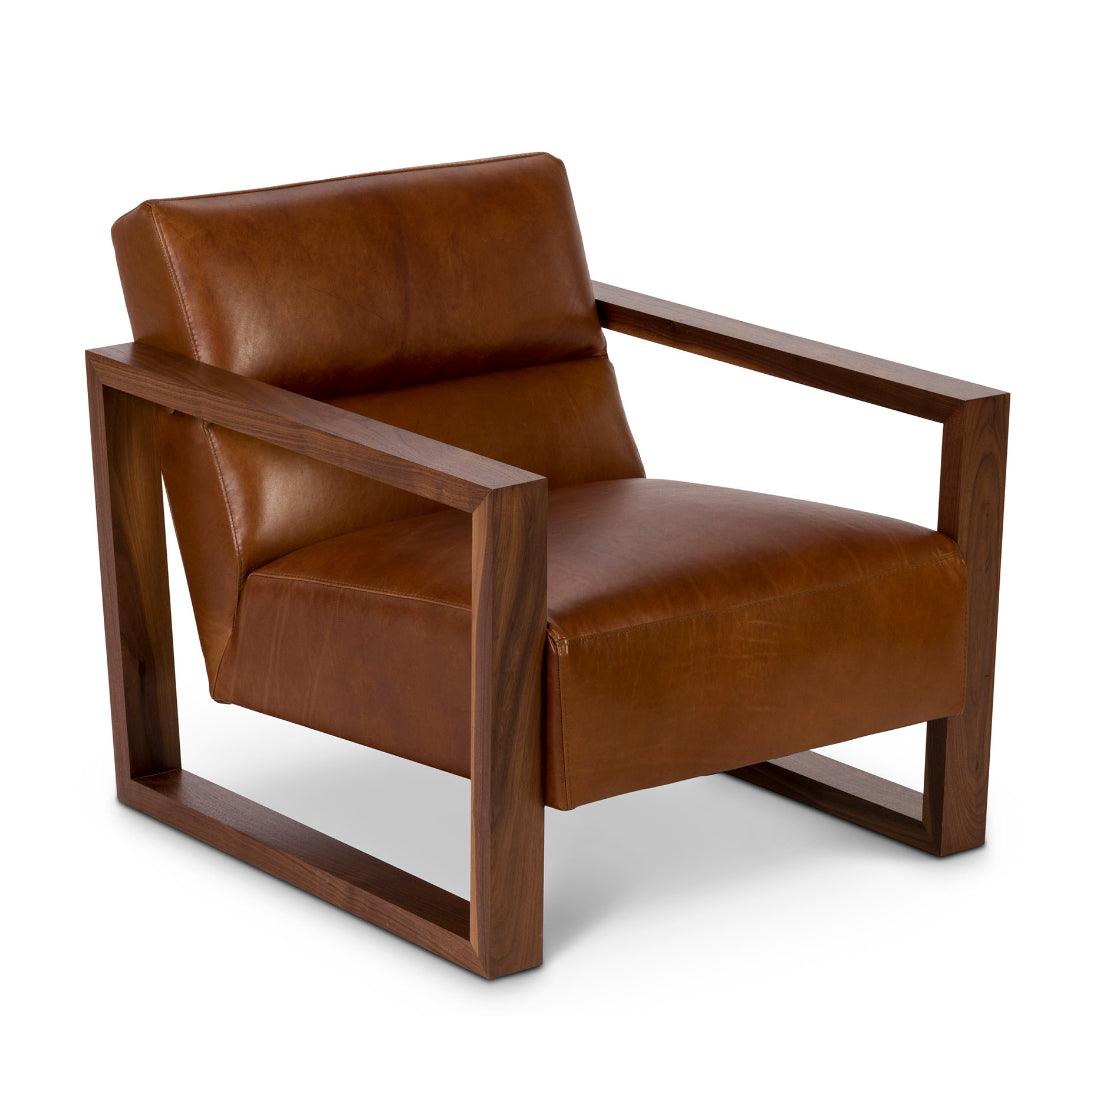 Bond Gentleman's Leather Club Chair - Uptown Sebastian